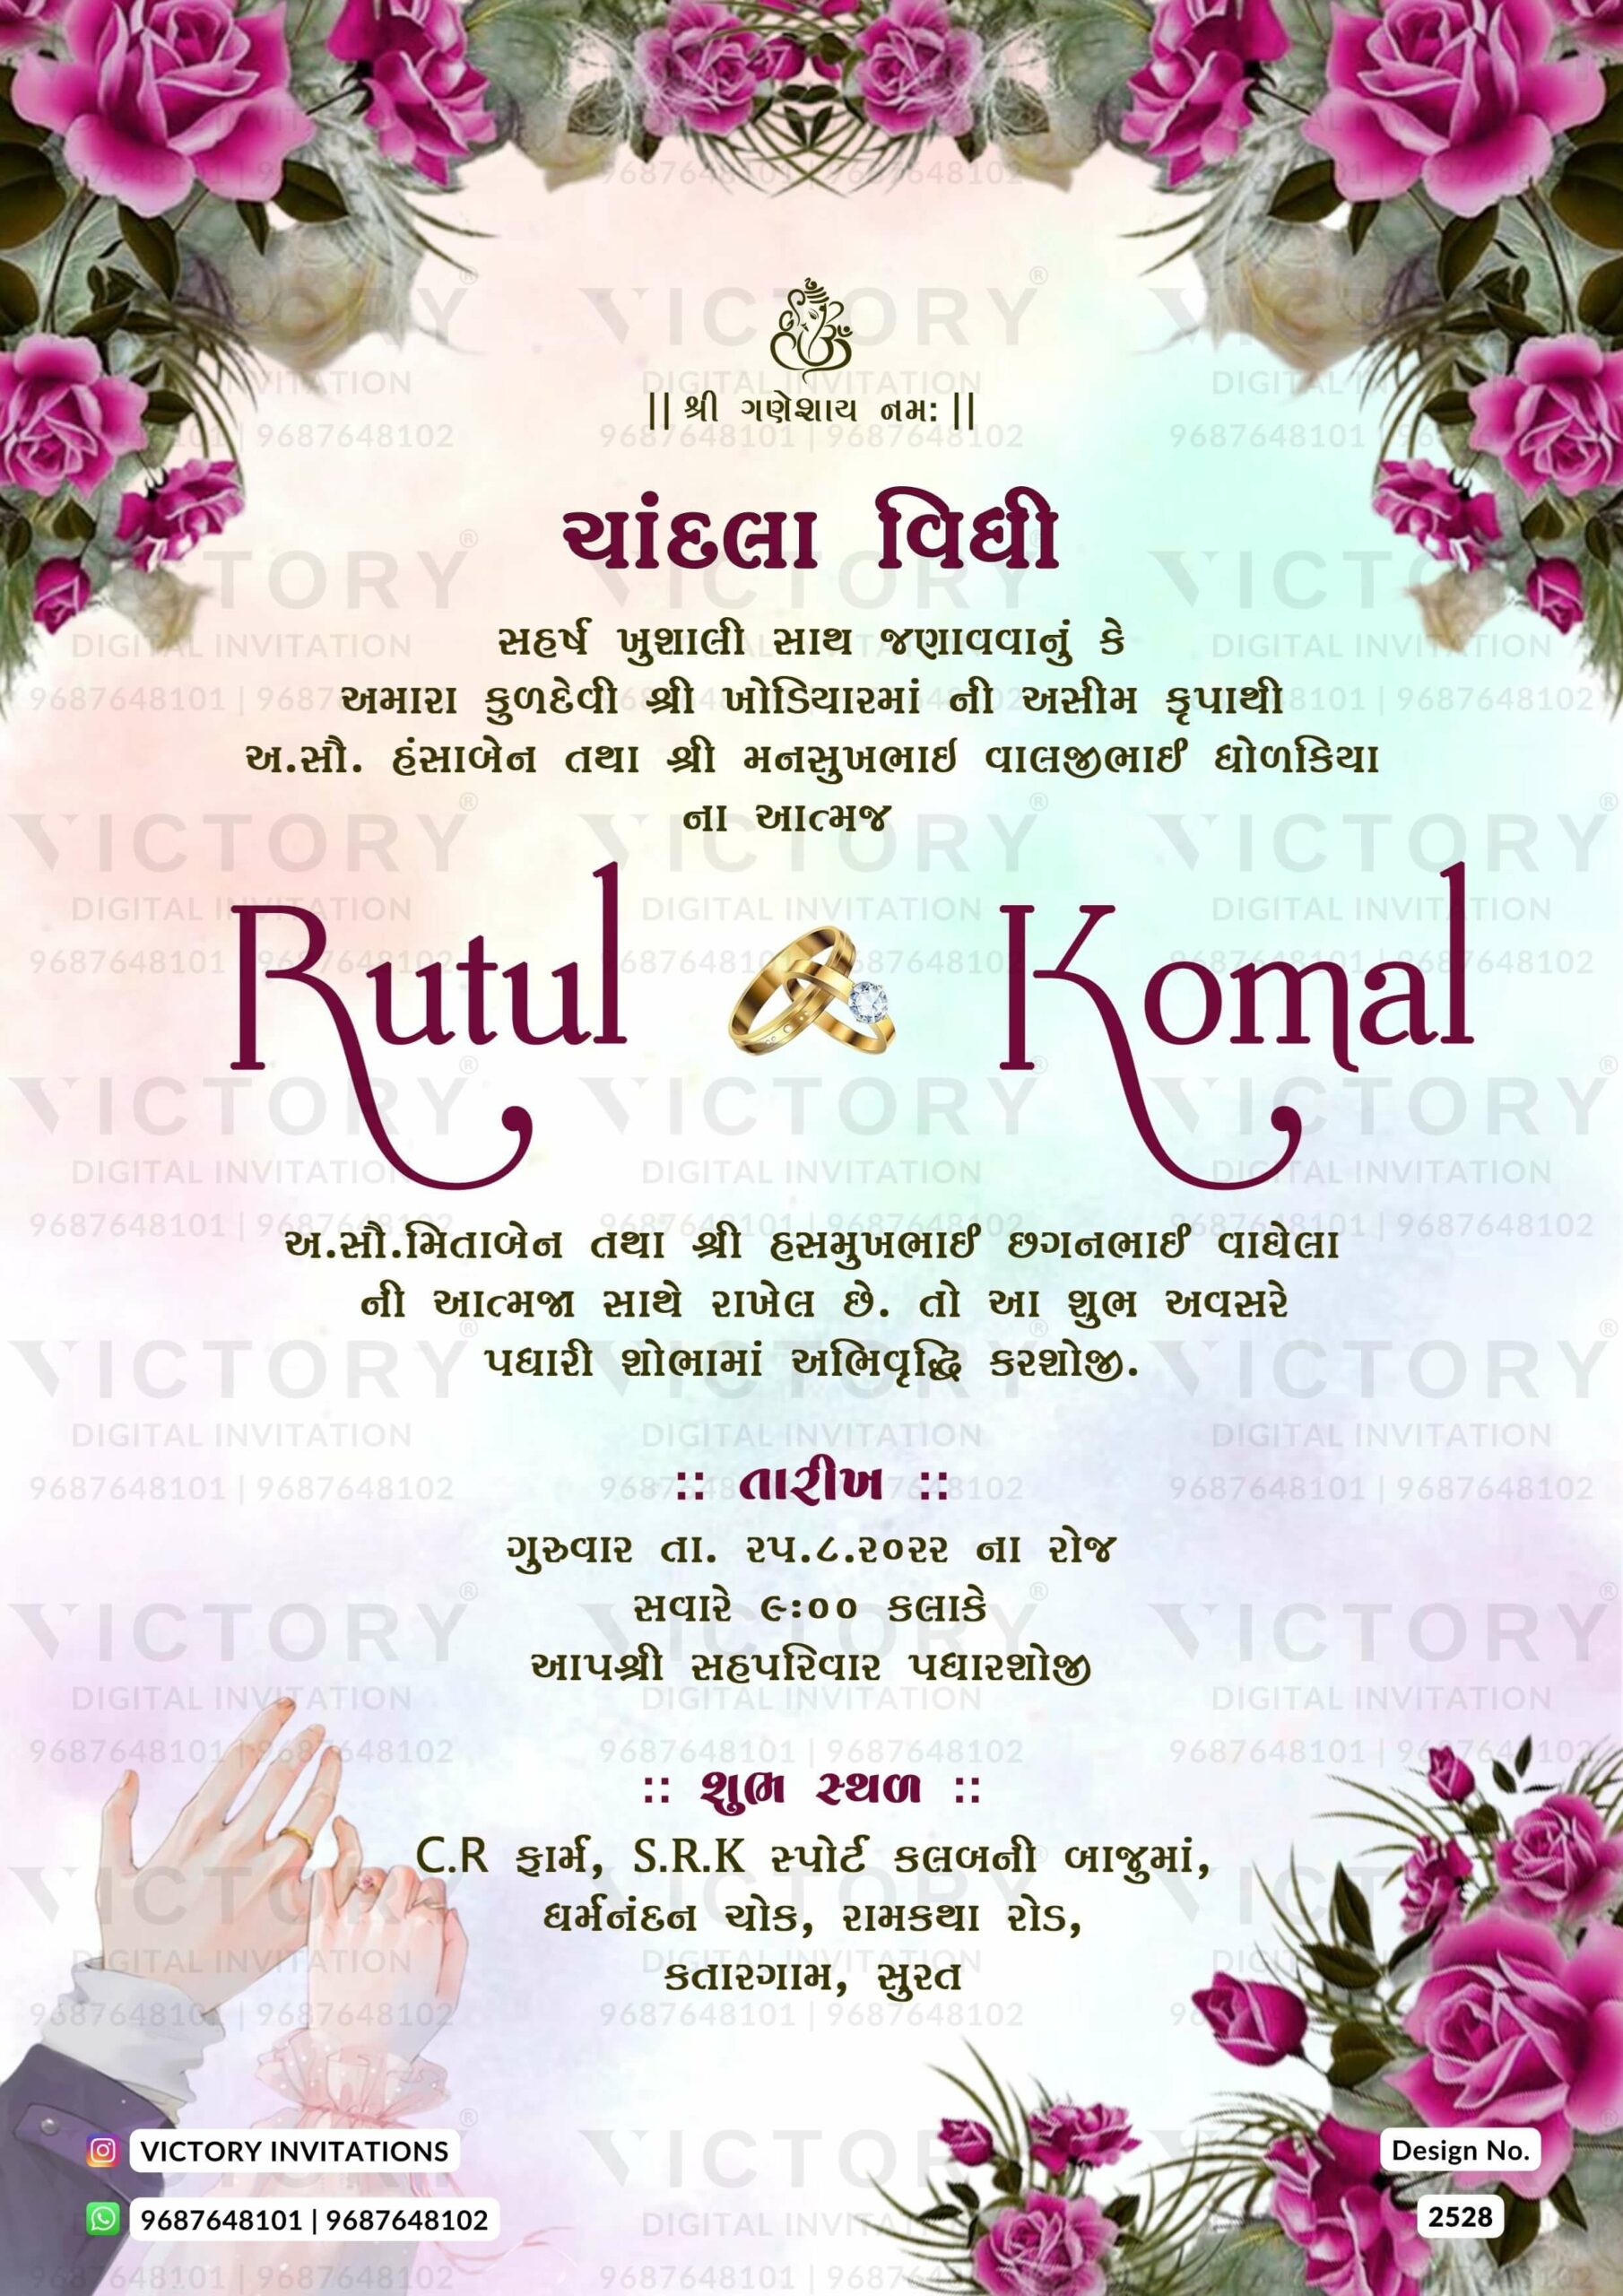 Pink floral theme digital engagement invitation card in Gujarati language design 2528